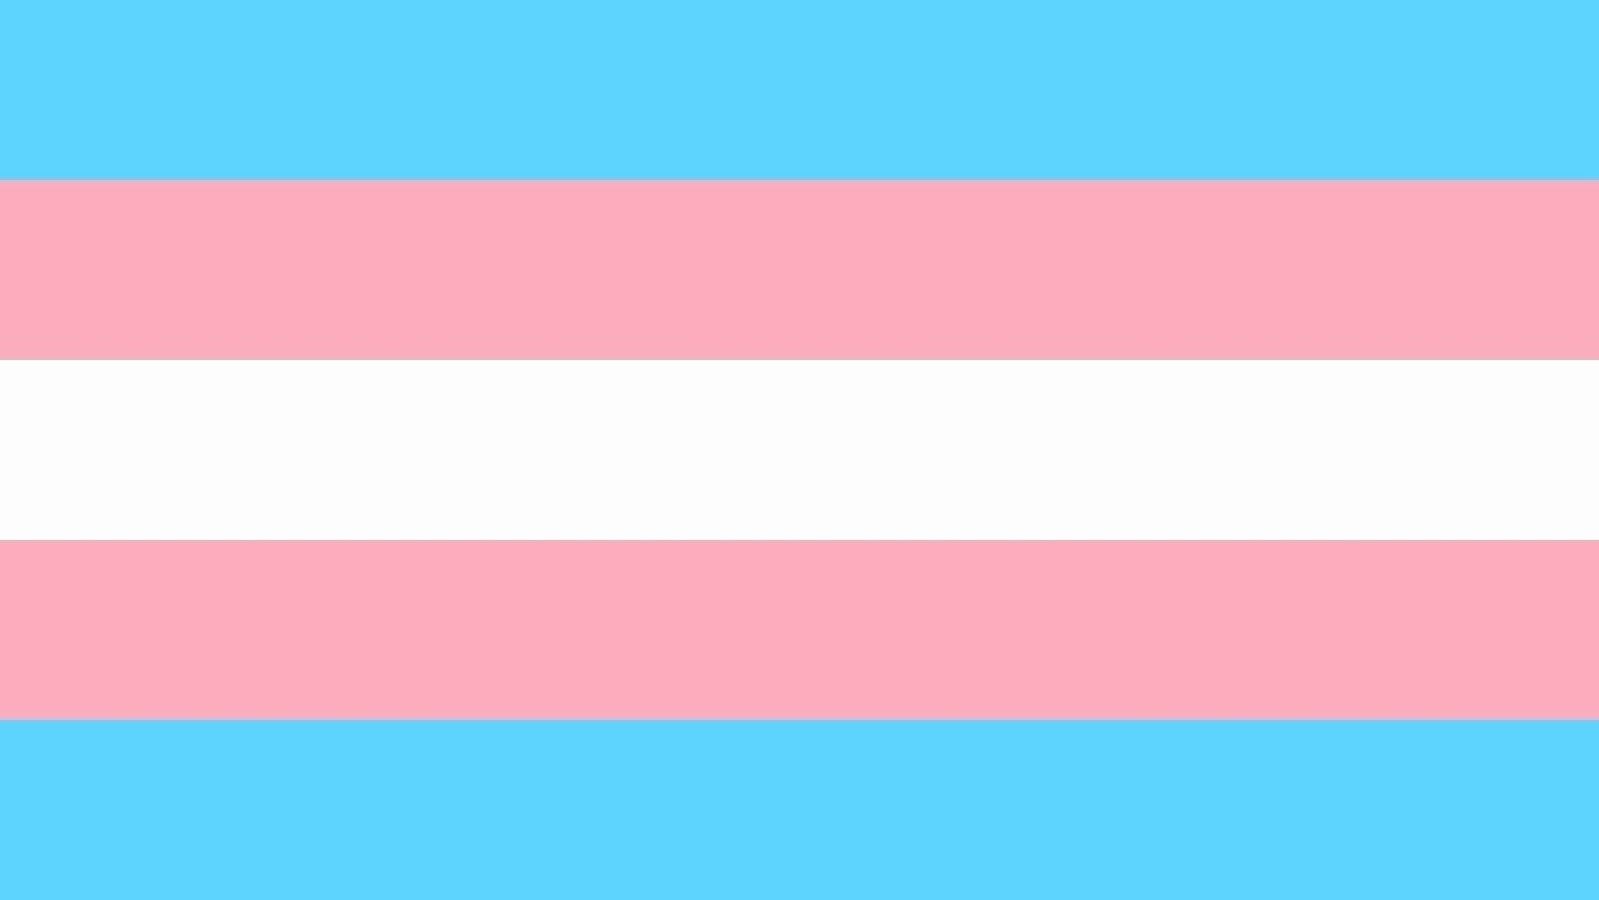 Trans Flag Wallpaper Awesome Petition · Unicode Add Transgender Pride Flag Emoji · Change 2019 of The Hudson